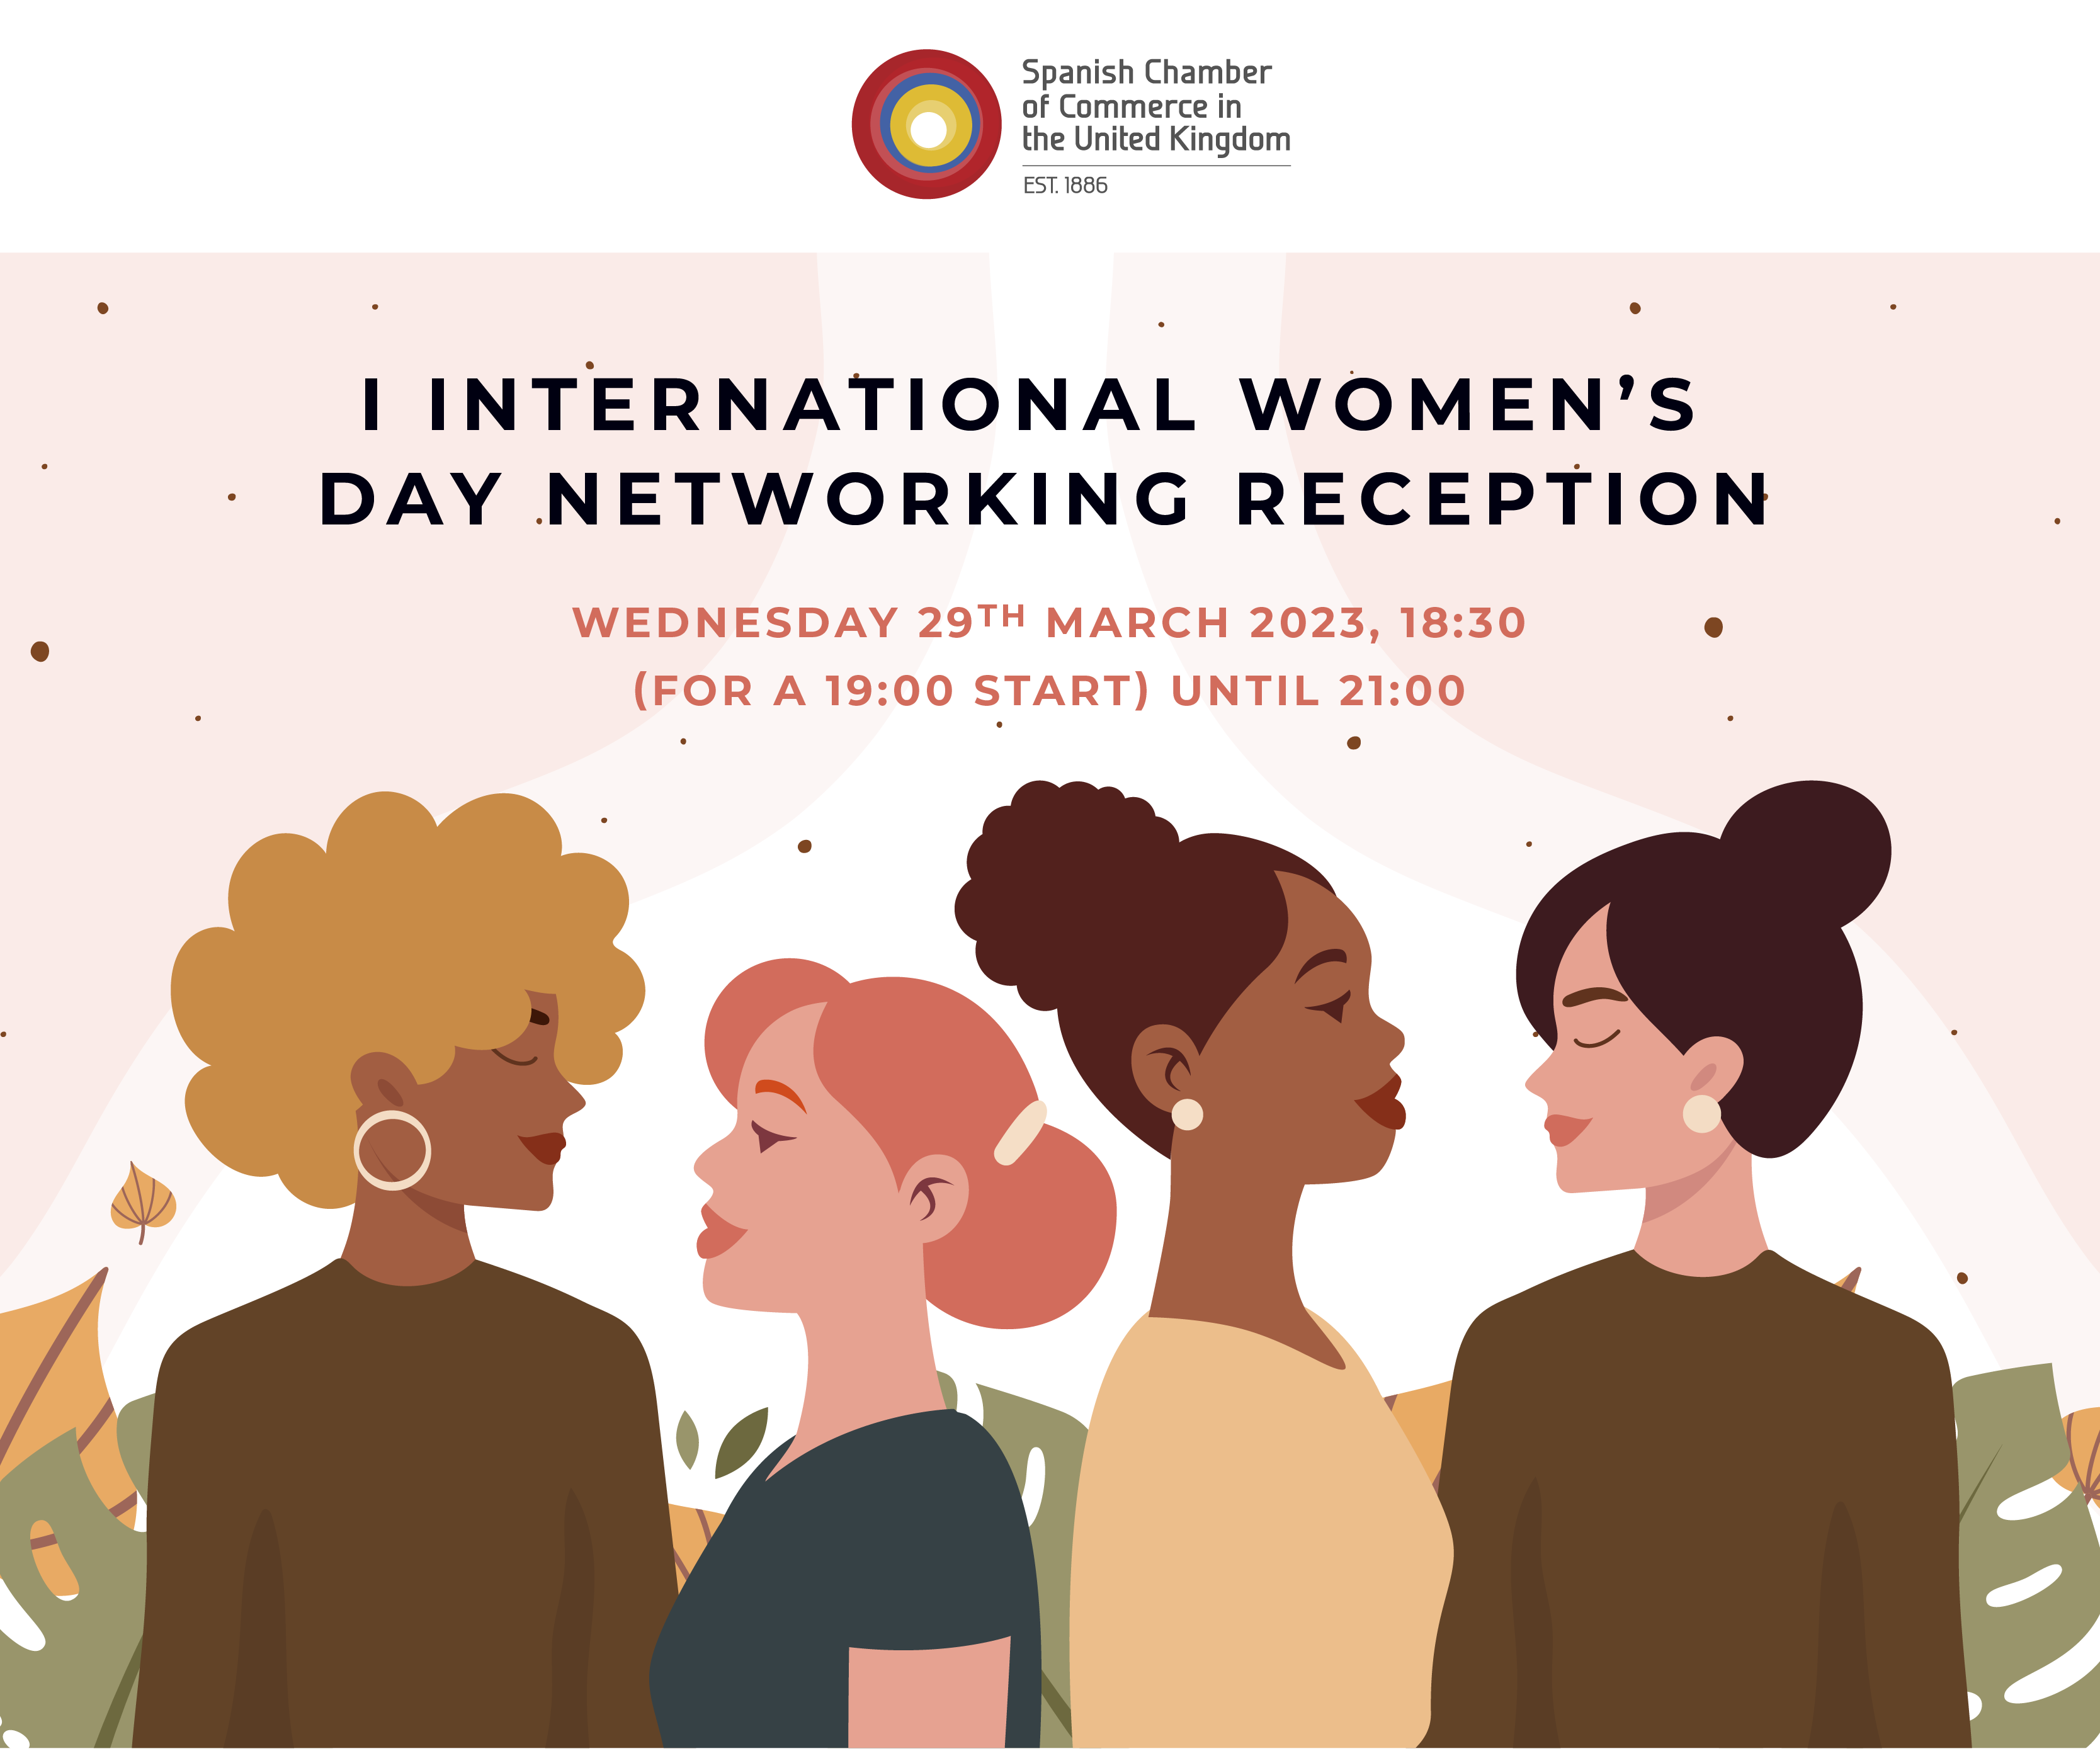 I INTERNATIONAL WOMEN'S DAY NETWORKING RECEPTION